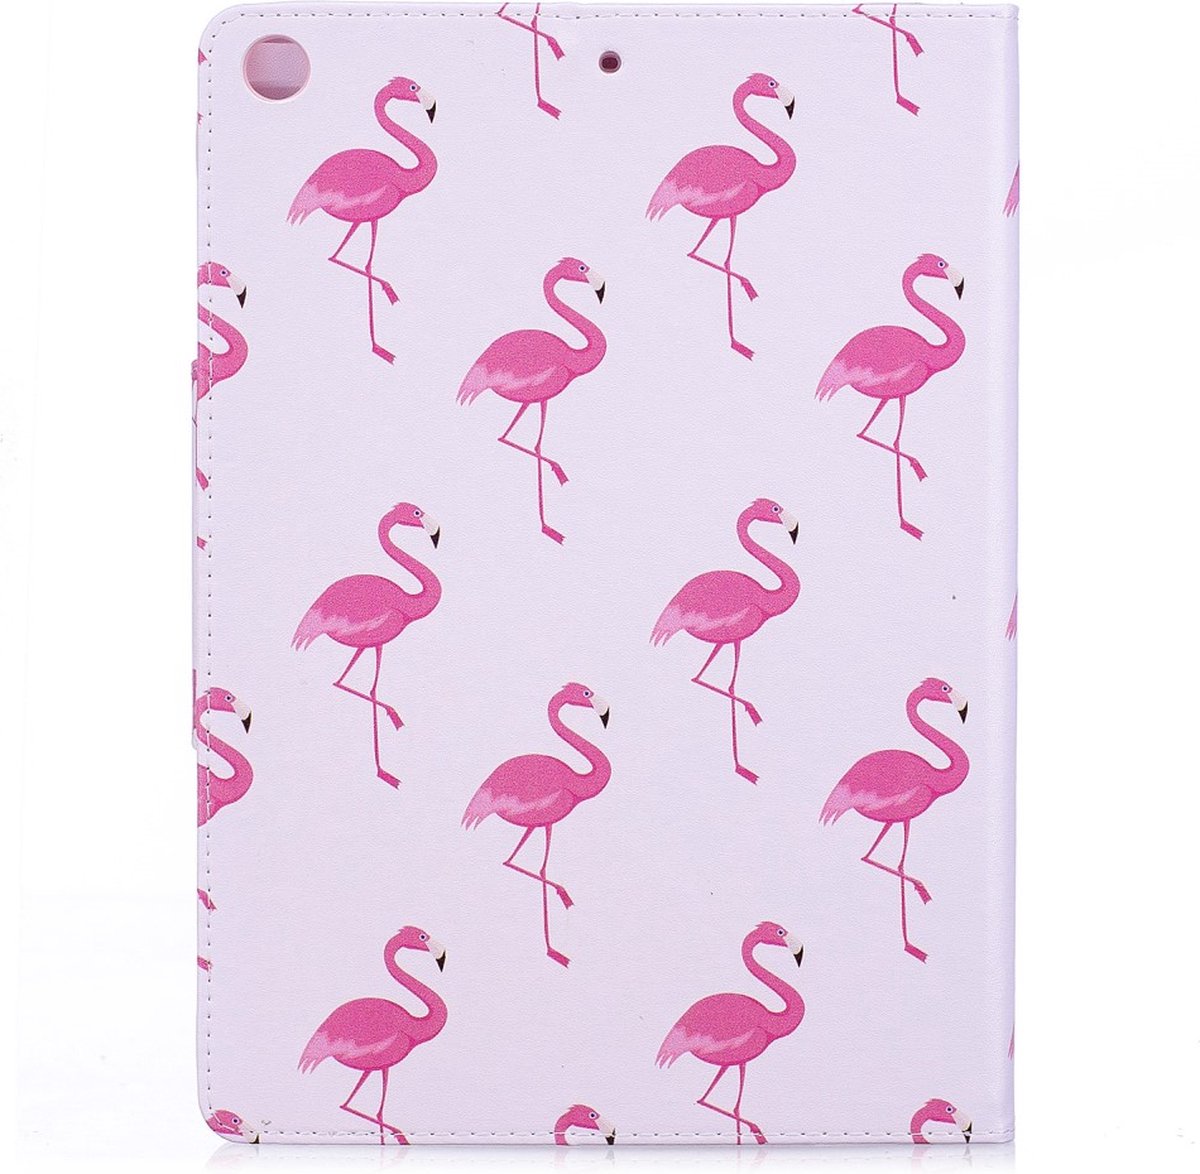 Peachy Flamingo flipcase leder hoes standaard iPad 2017 2018 - Wit Roze